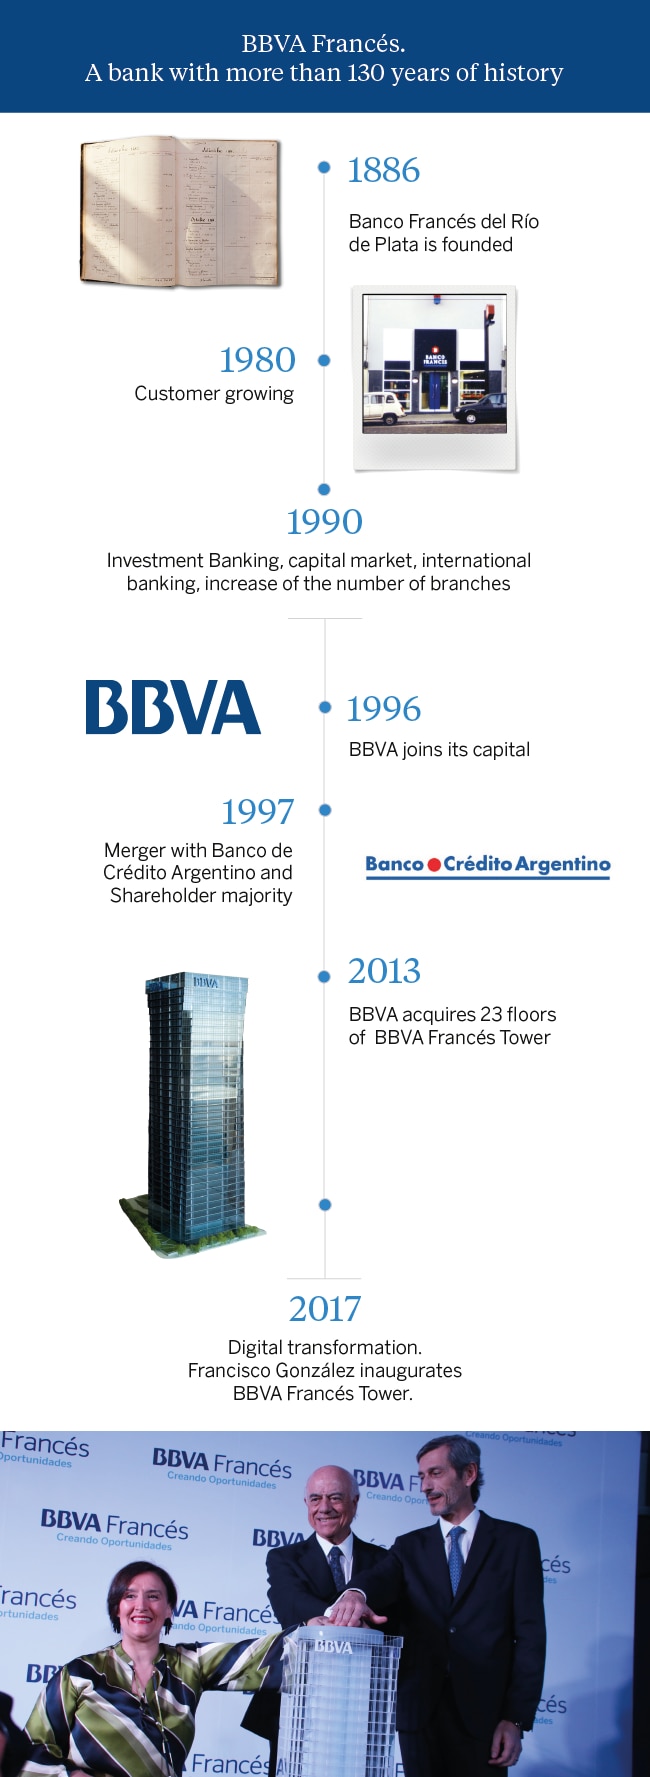 frances-bank-history-argentina-bbva